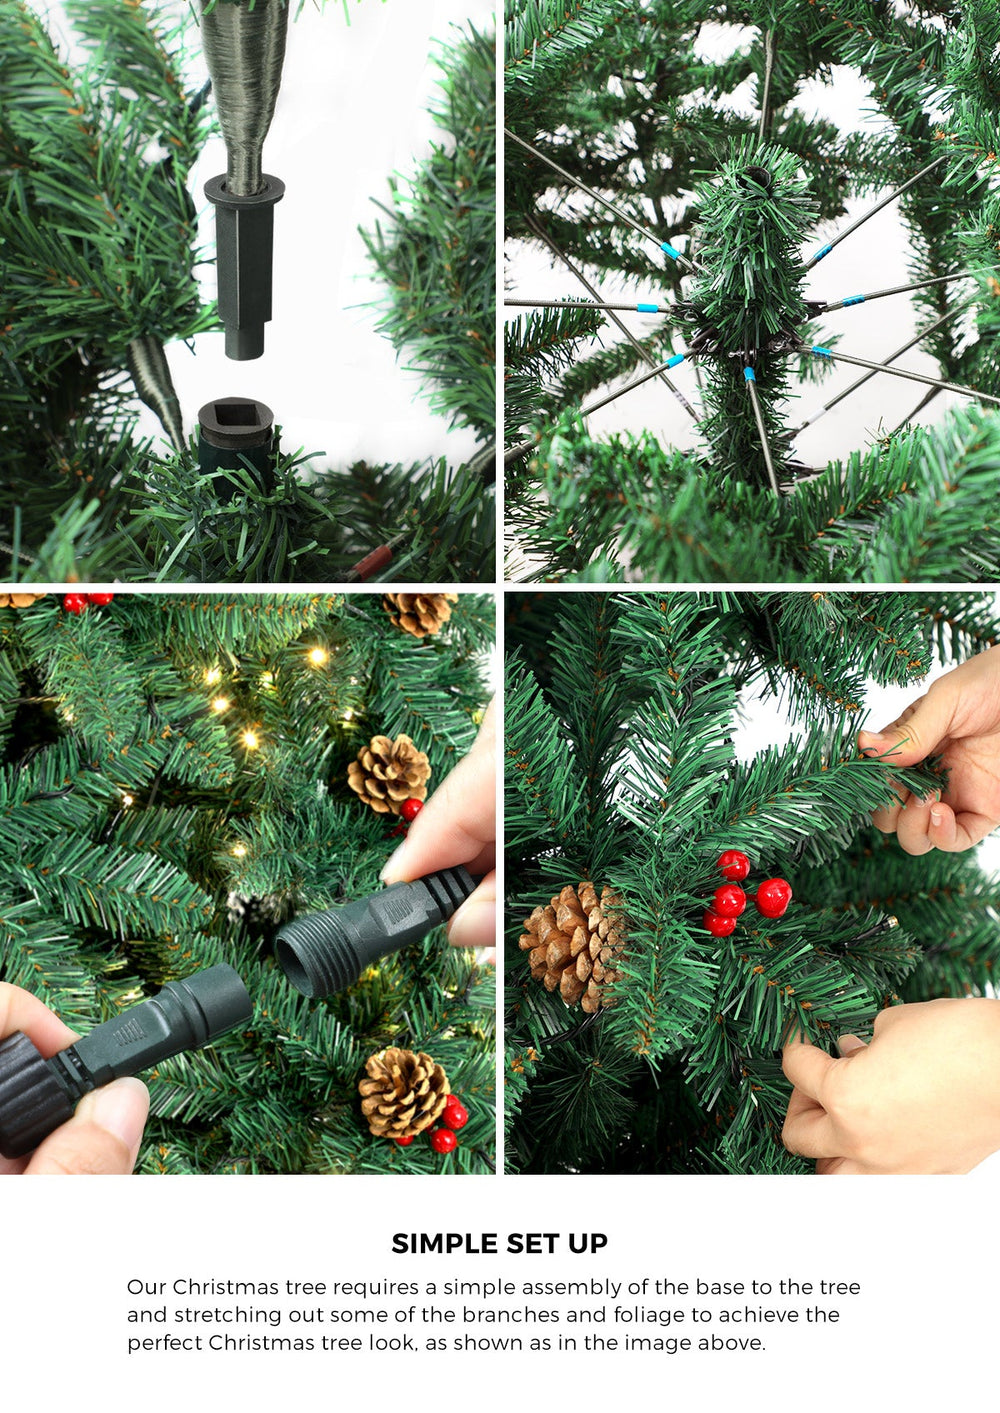 Mazam LED Christmas Tree 2.1M 7FT Xmas Trees Decorations Green with Ornaments